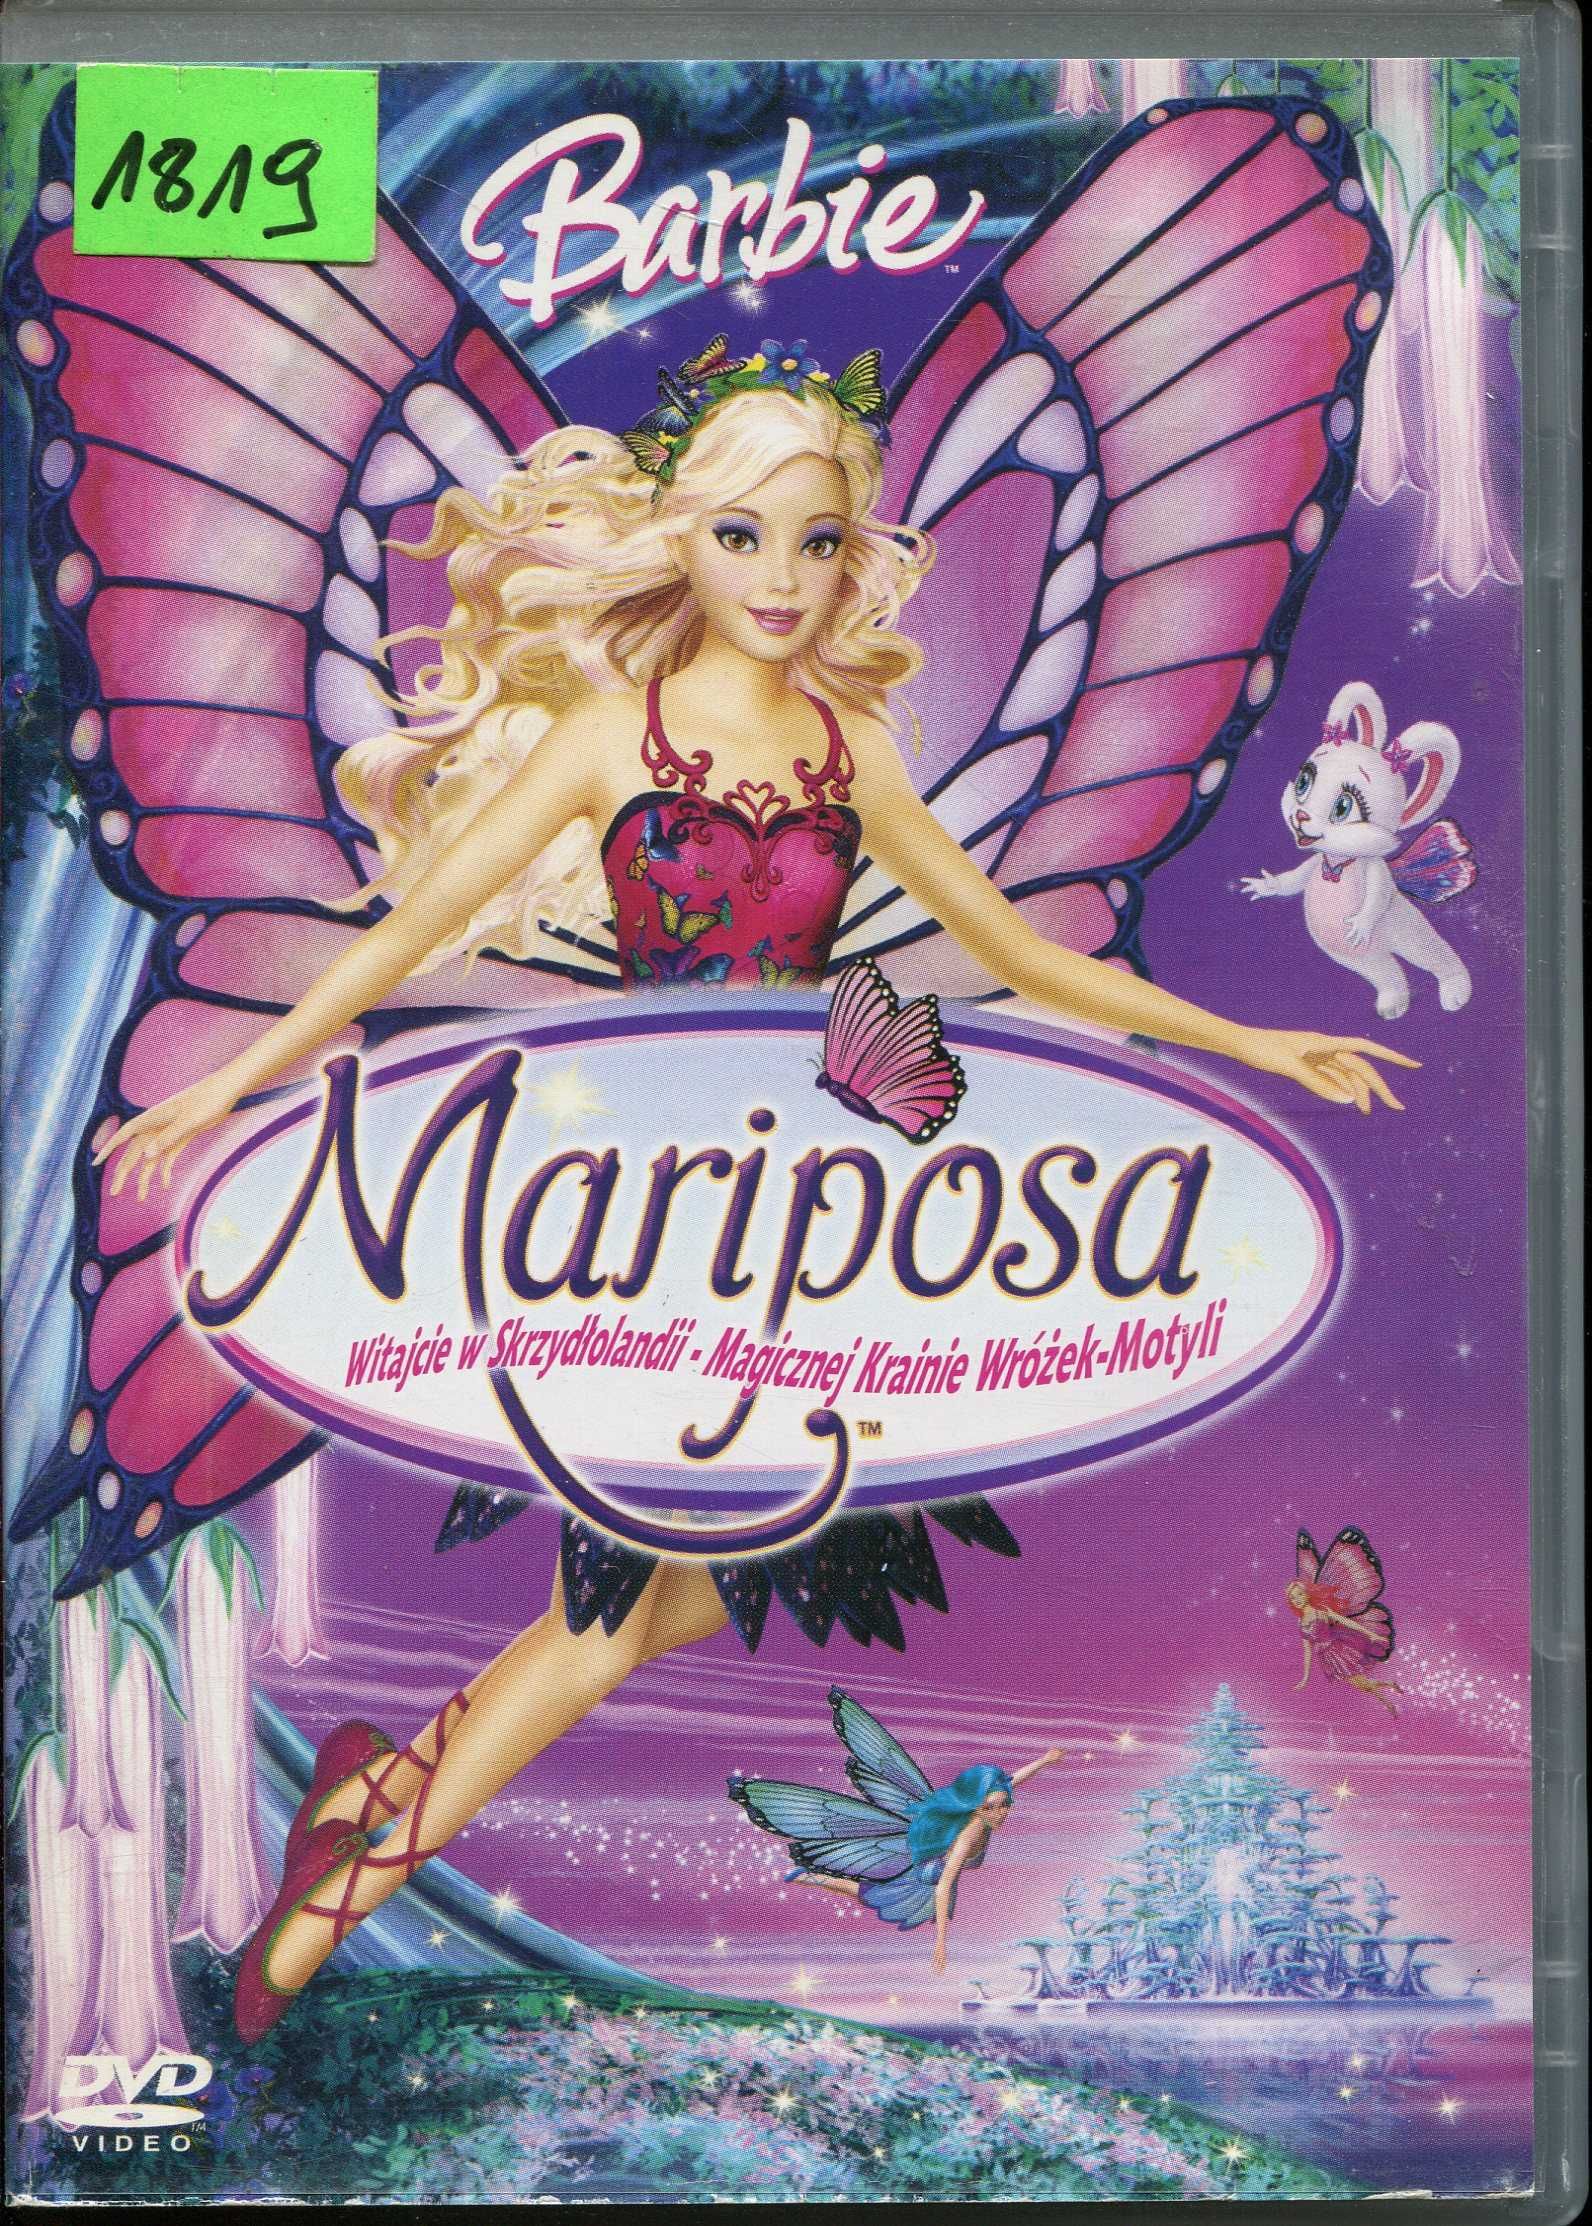 Barbie Mariposa dvd